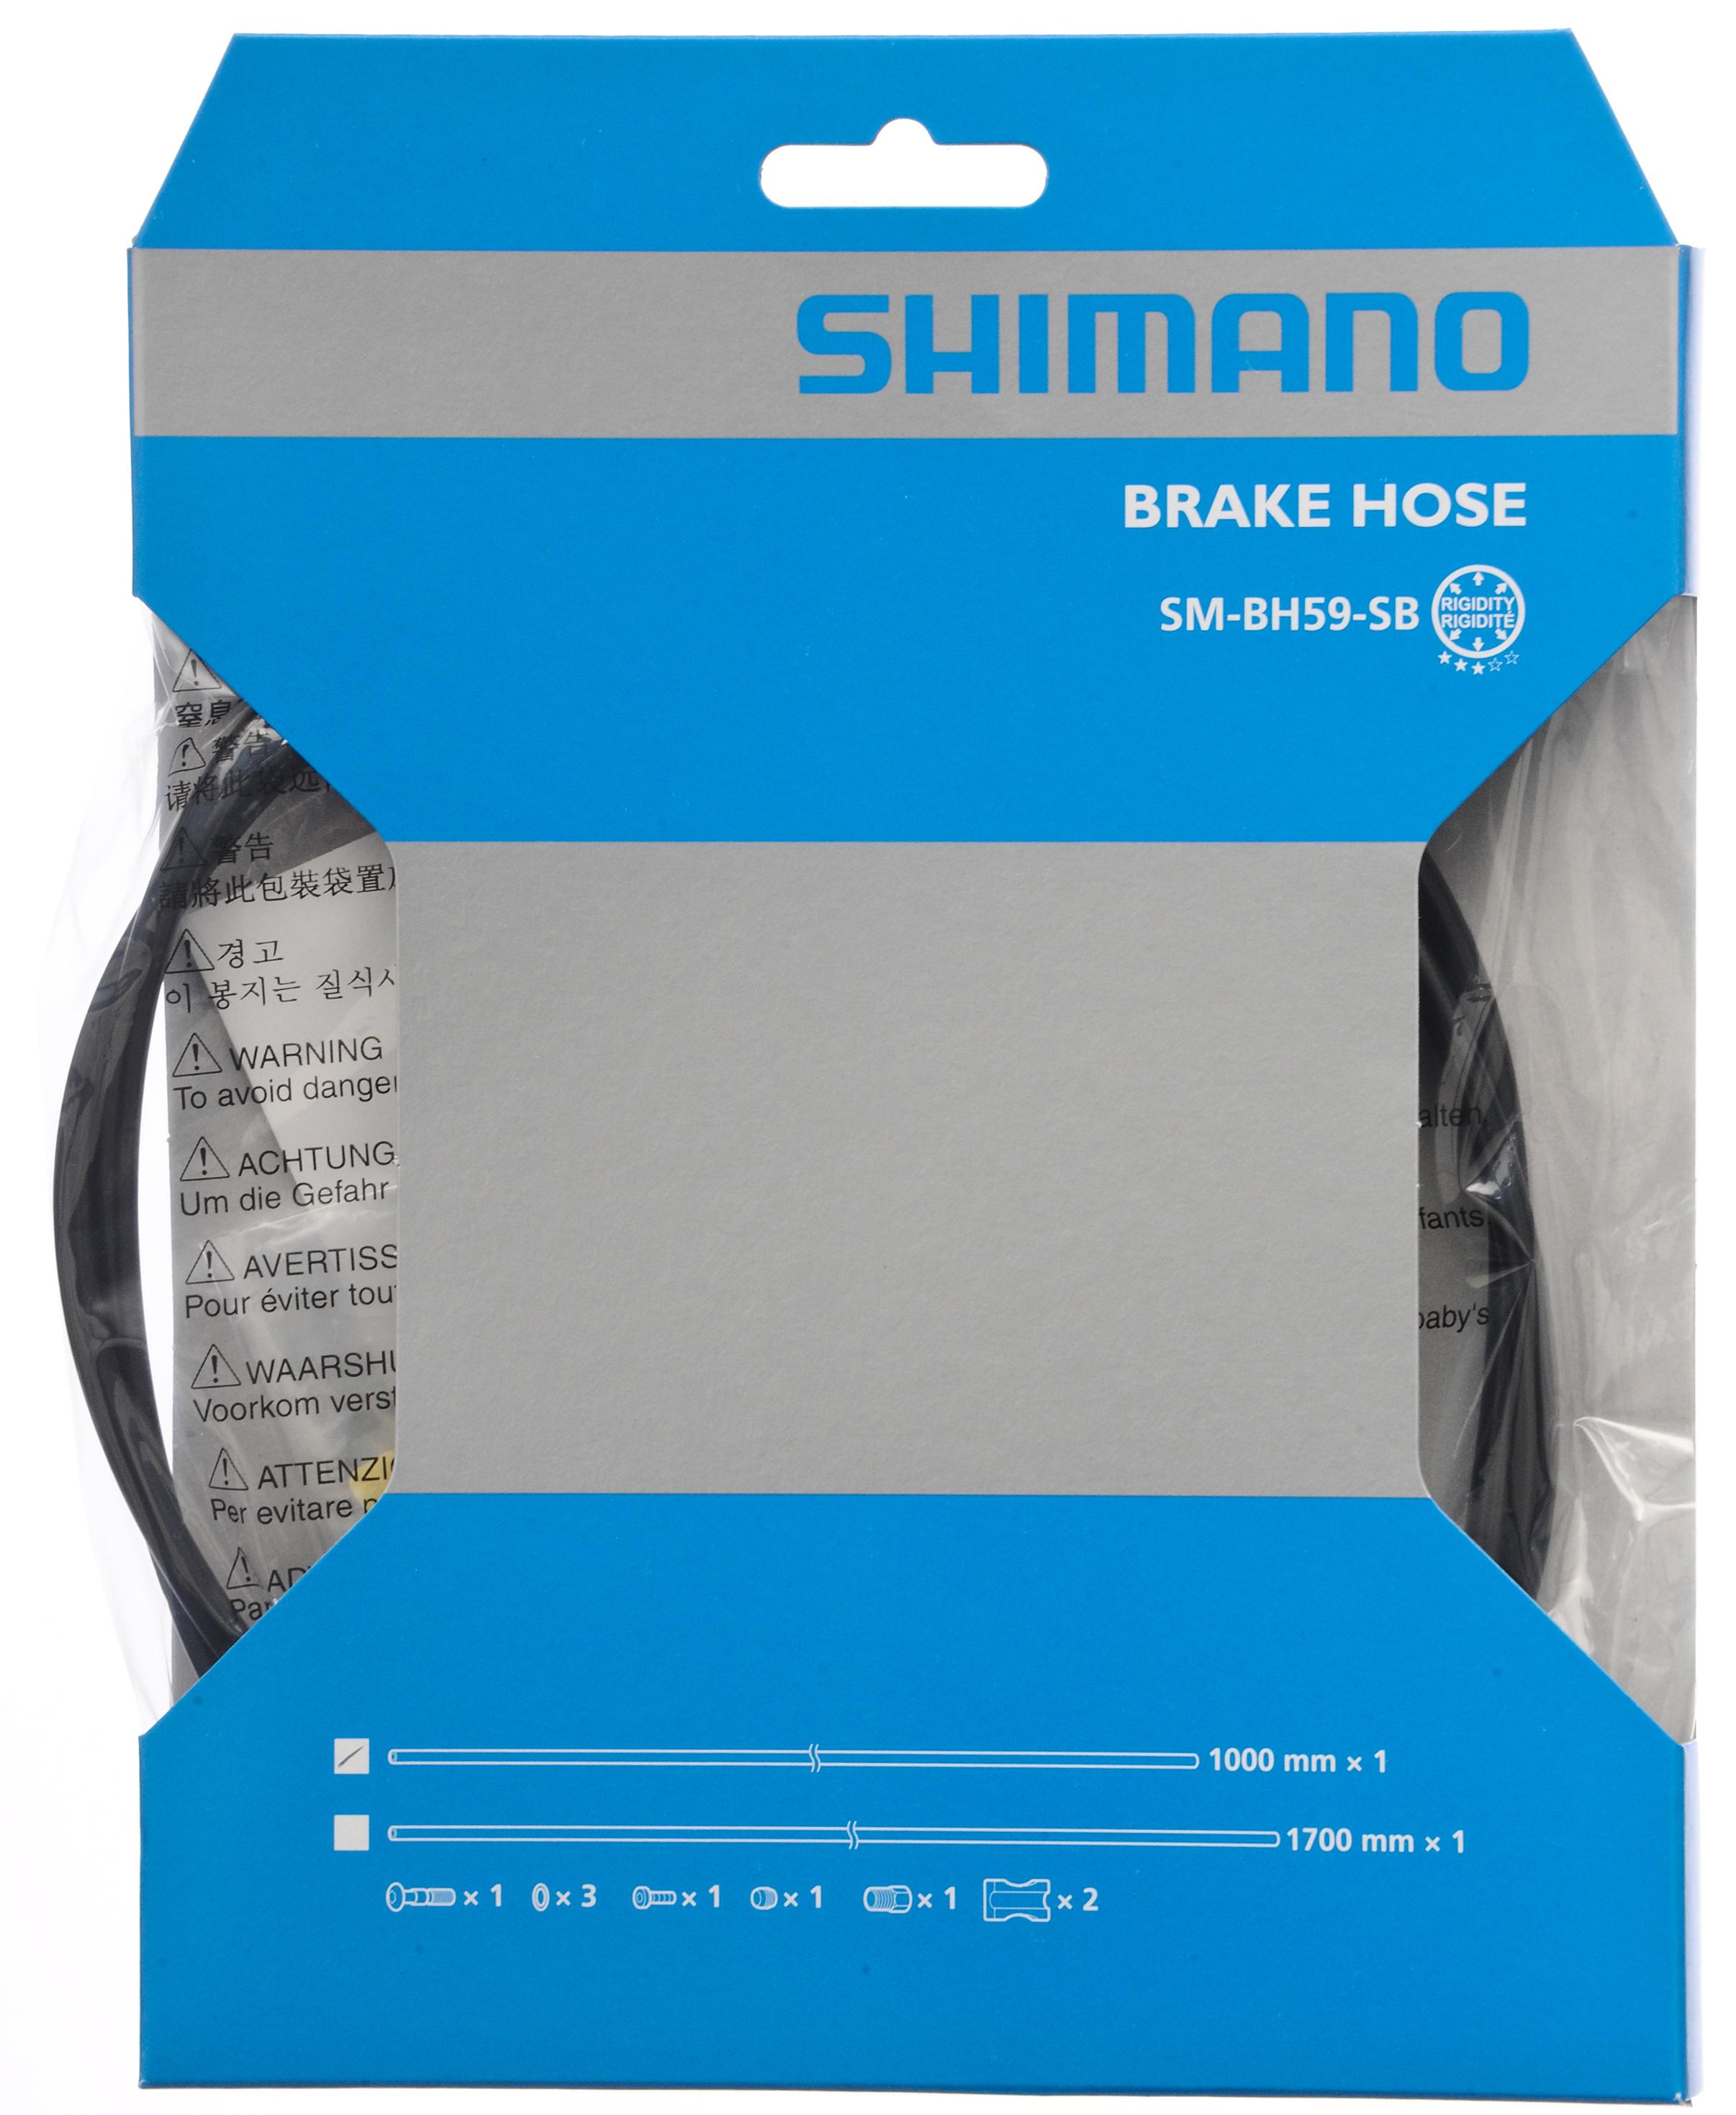 Shimano Br-r785 (bh59) Road Disc Brake Hose - Black